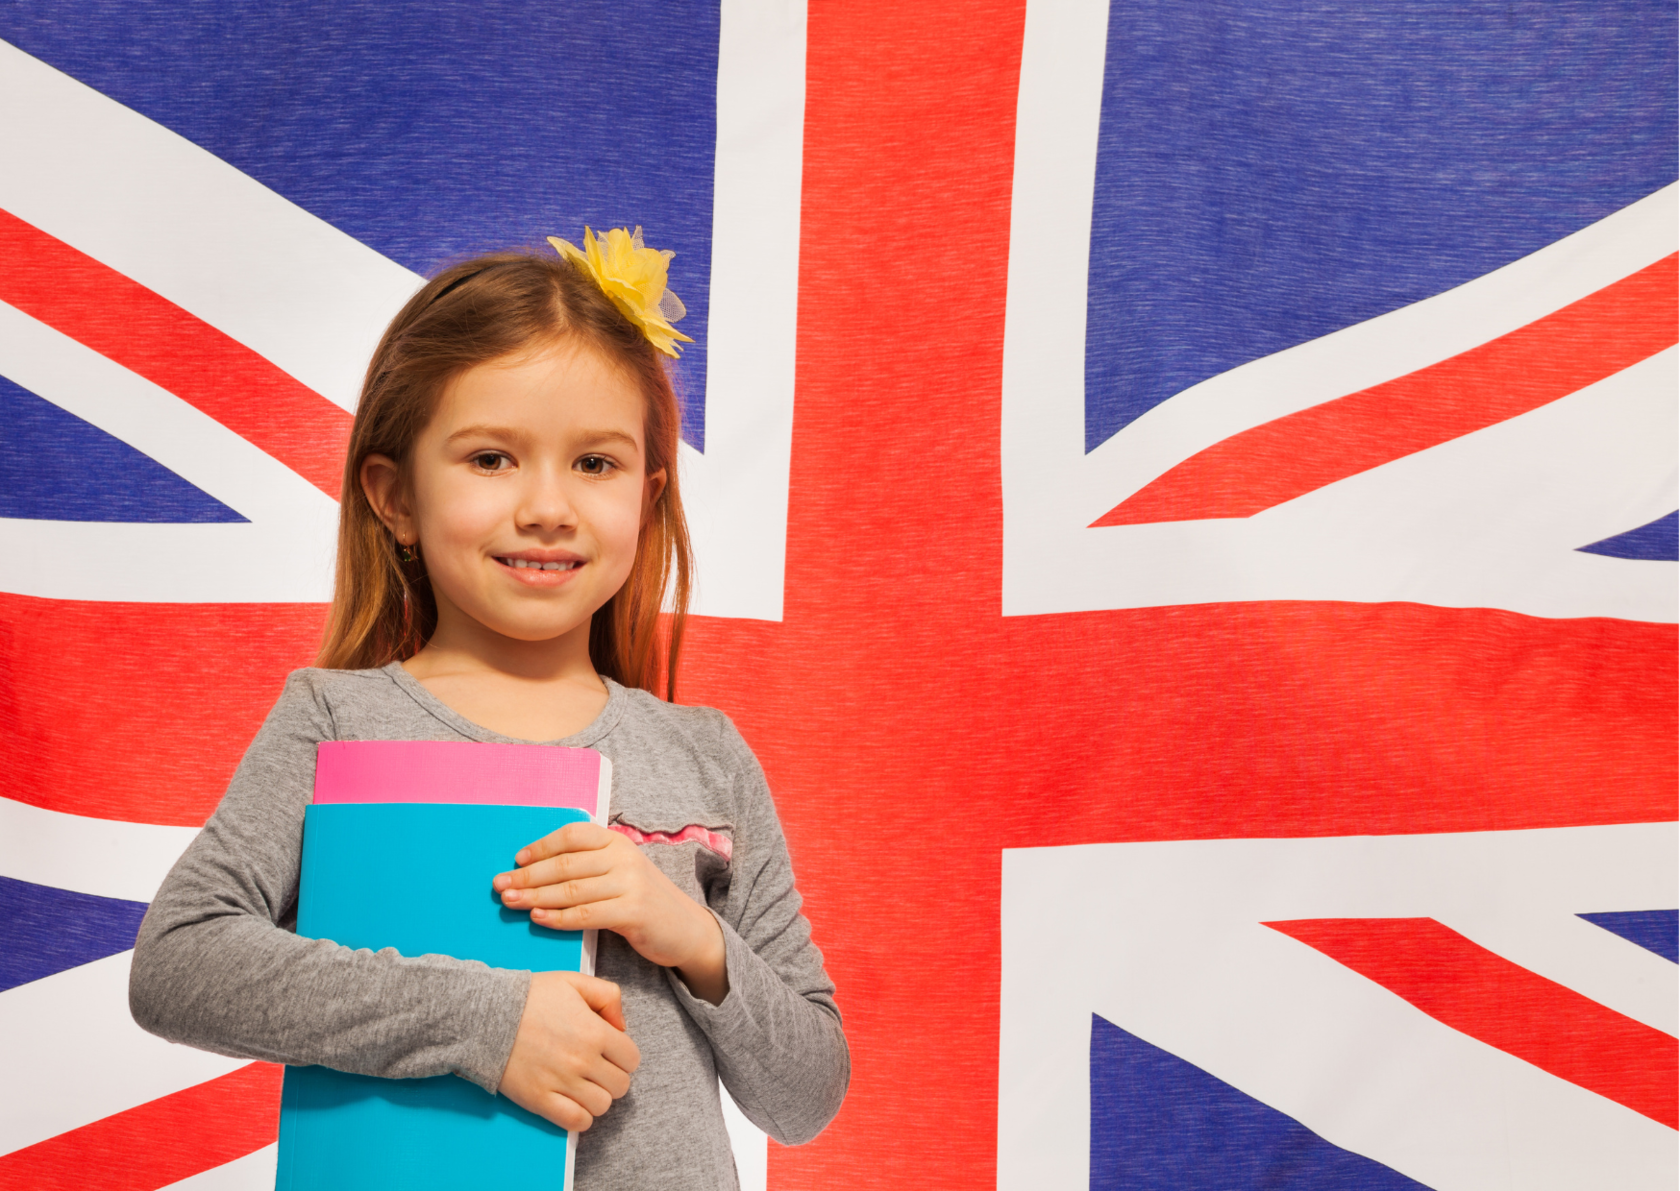 Английский ребенок россия. Английский для детей. Дети учат английский. Английский язык для детей. Ребенок с британским флагом.